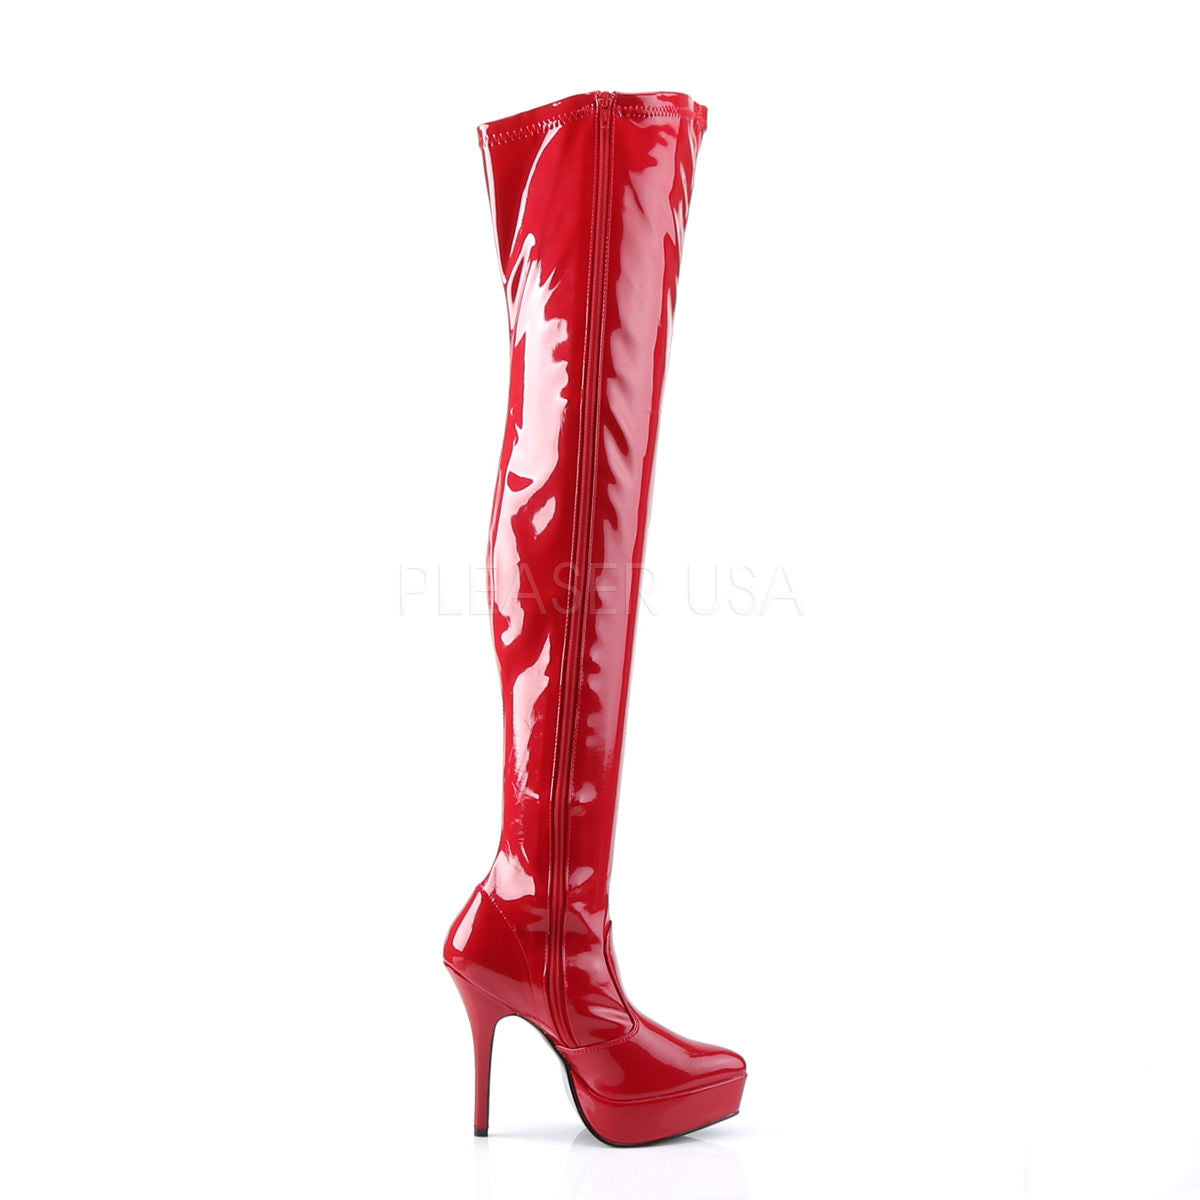 5 Inch Heel INDULGE-3000 Red Stretch Patent